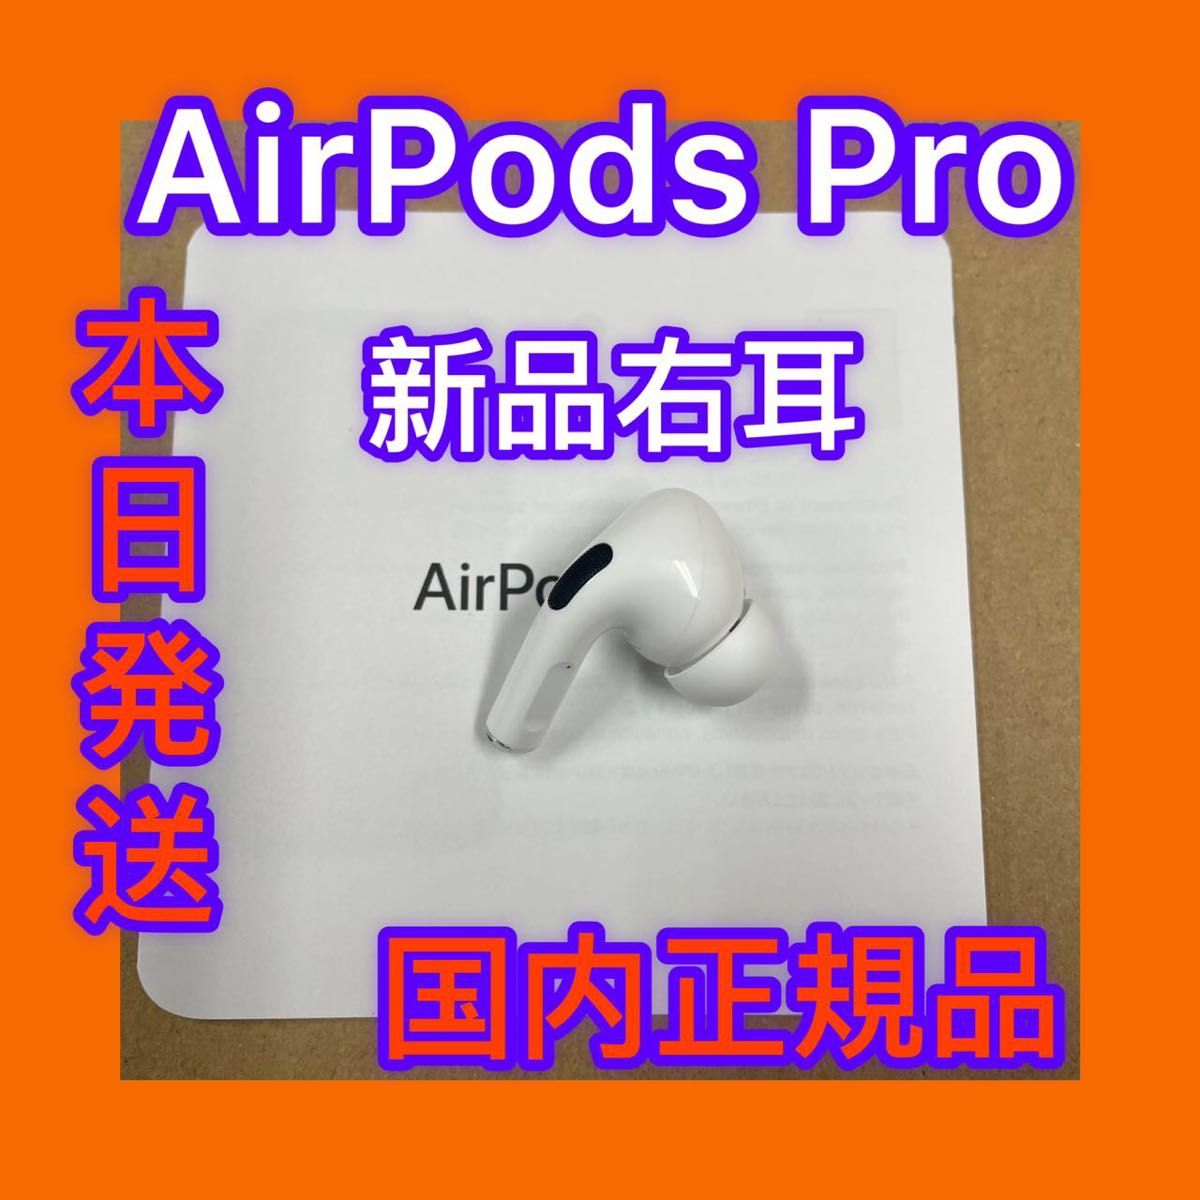 Airpods pro 2 右耳のみ 新品 未使用 | www.myglobaltax.com